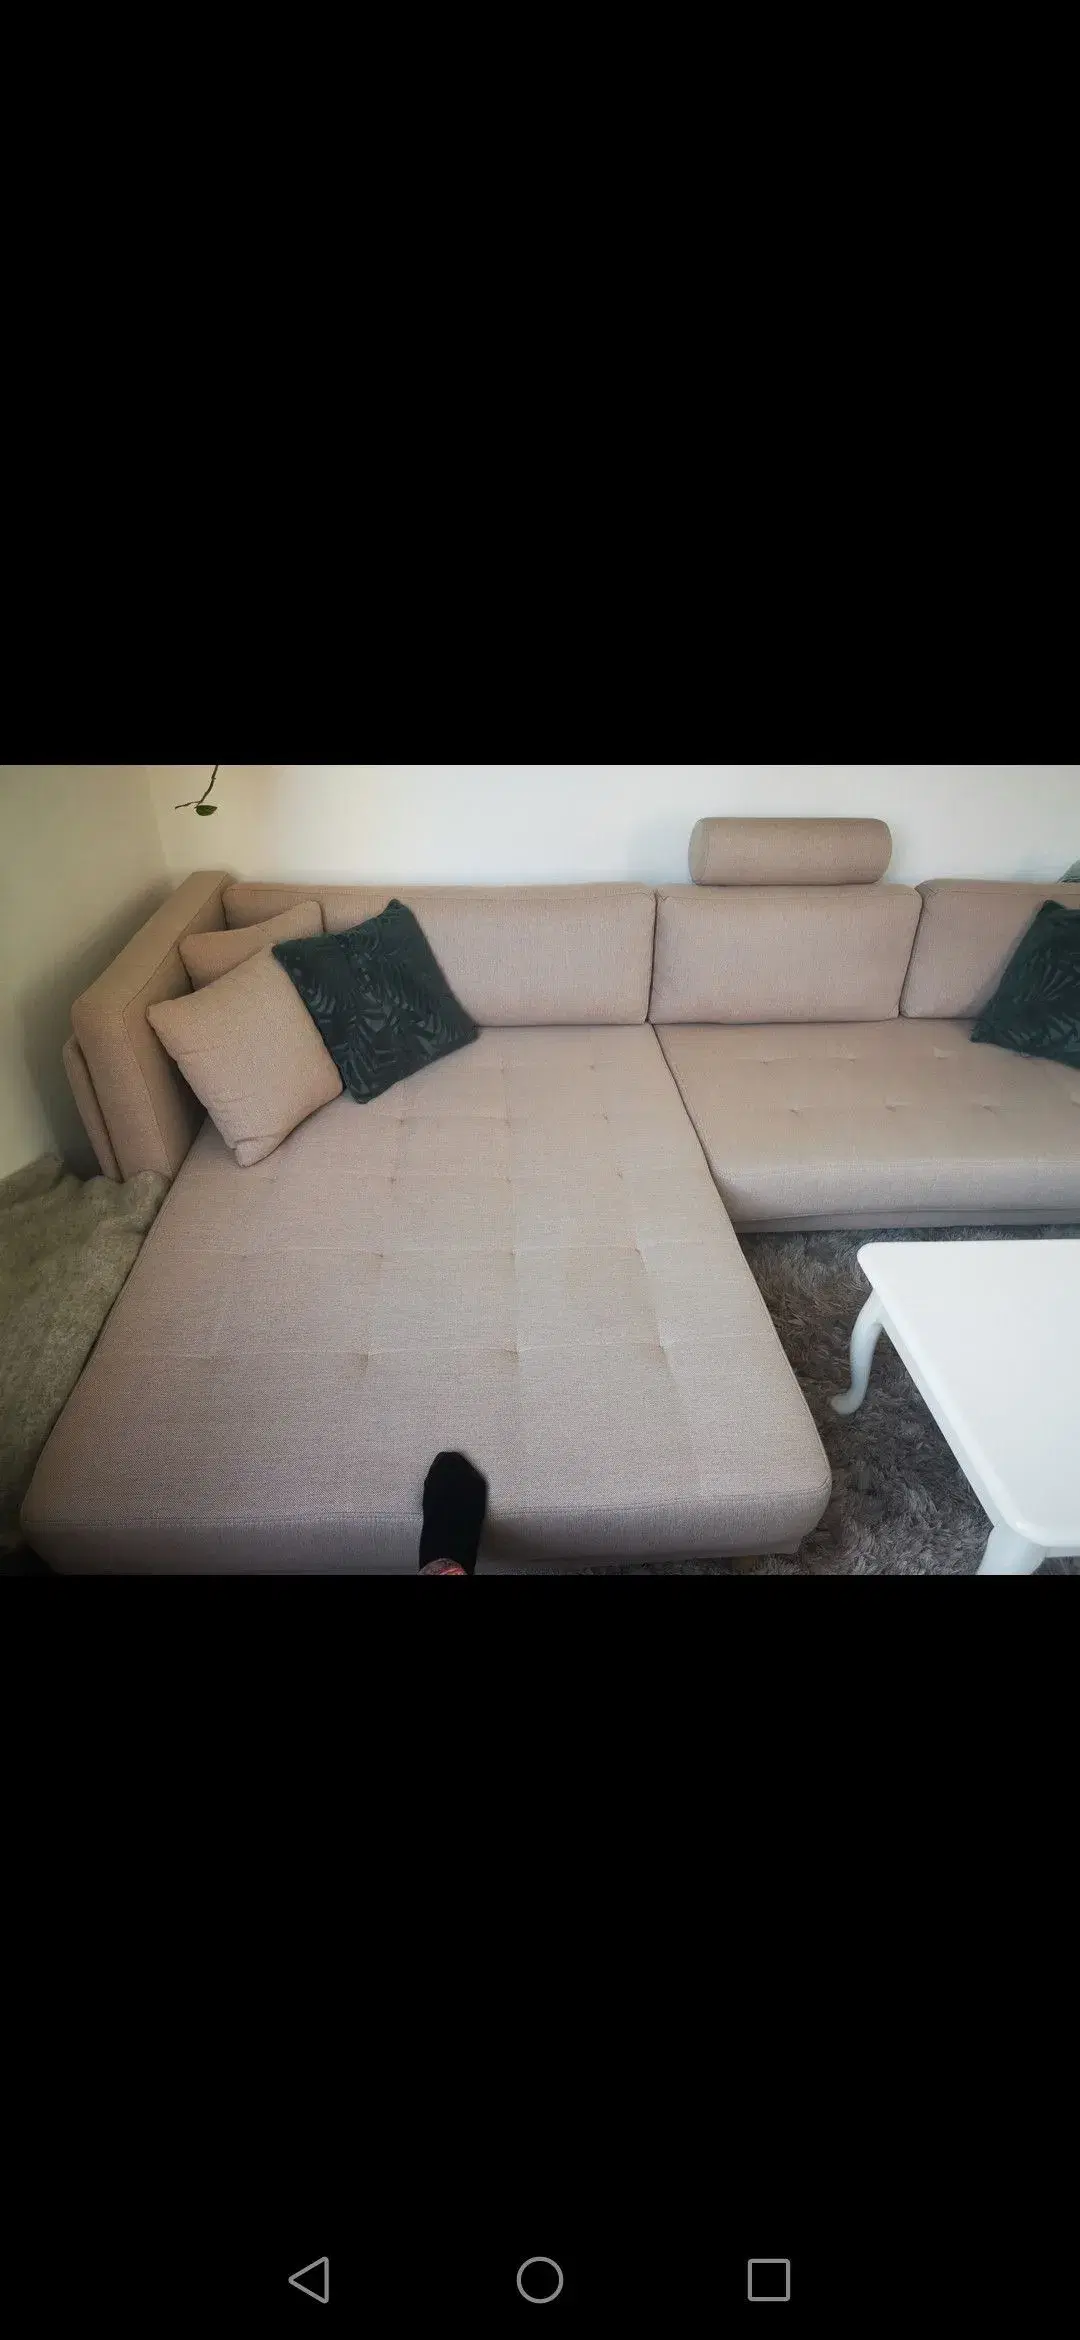 Chaiselong sofa perfekt til de små kbh lejl